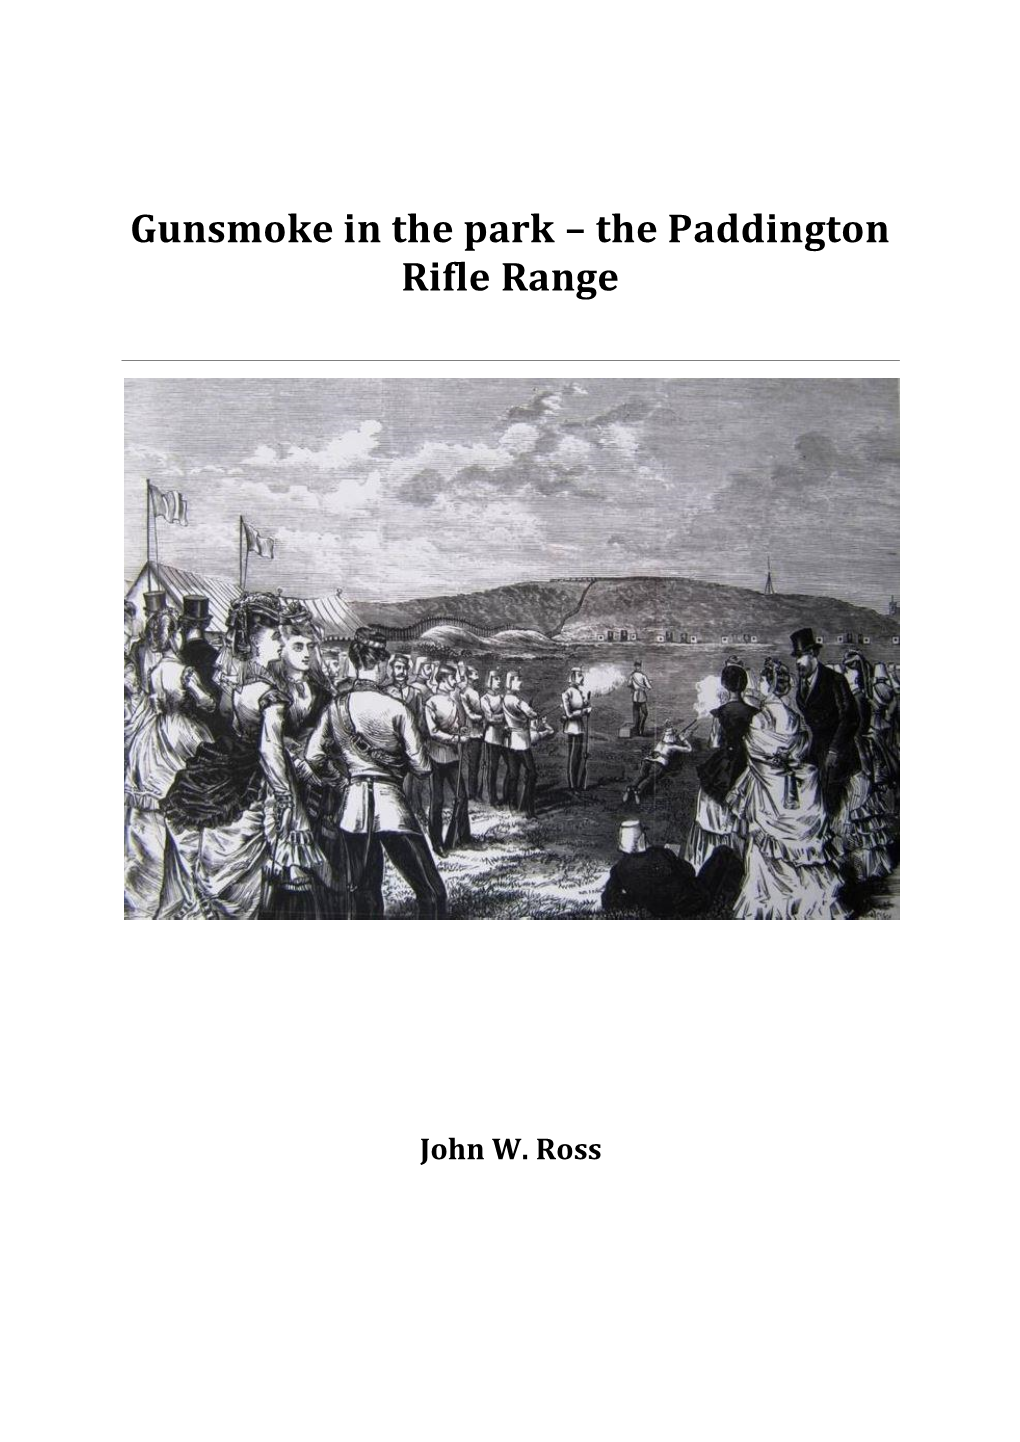 The Paddington Rifle Range